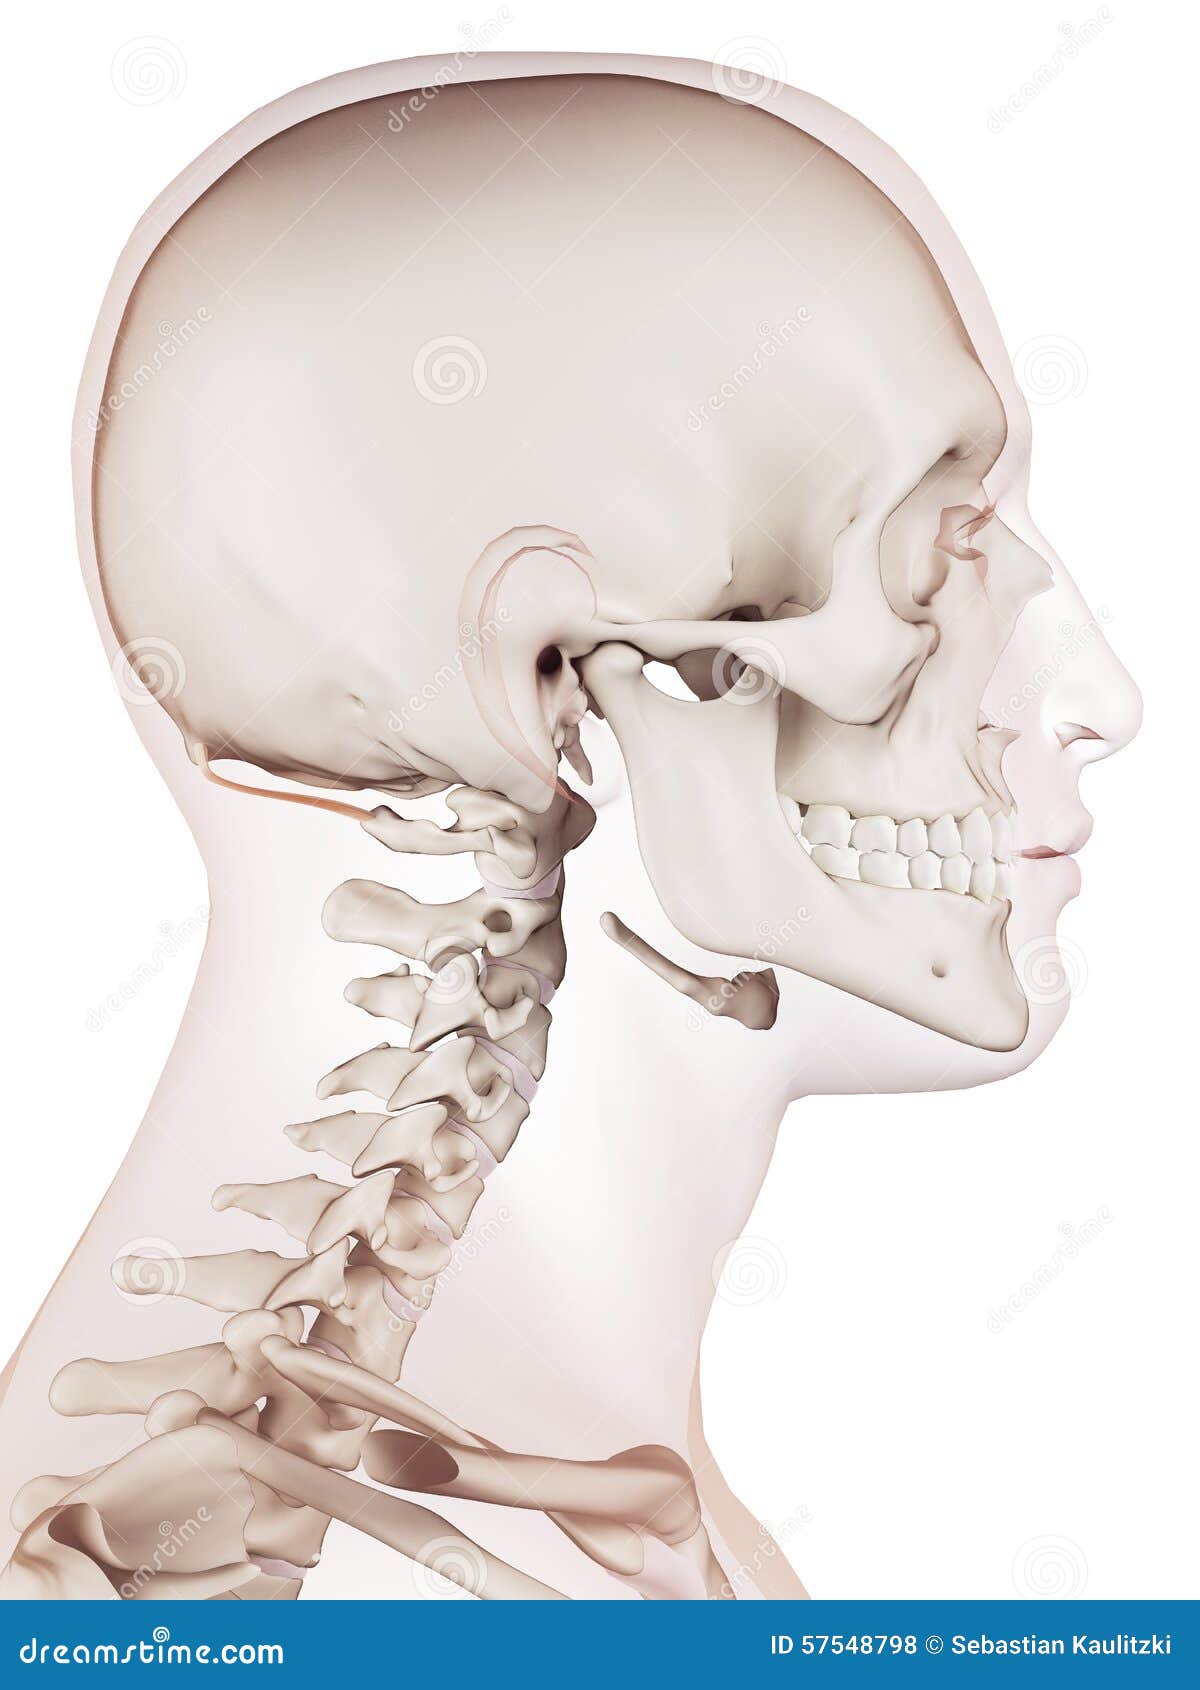 the rectus capitis posterior minor